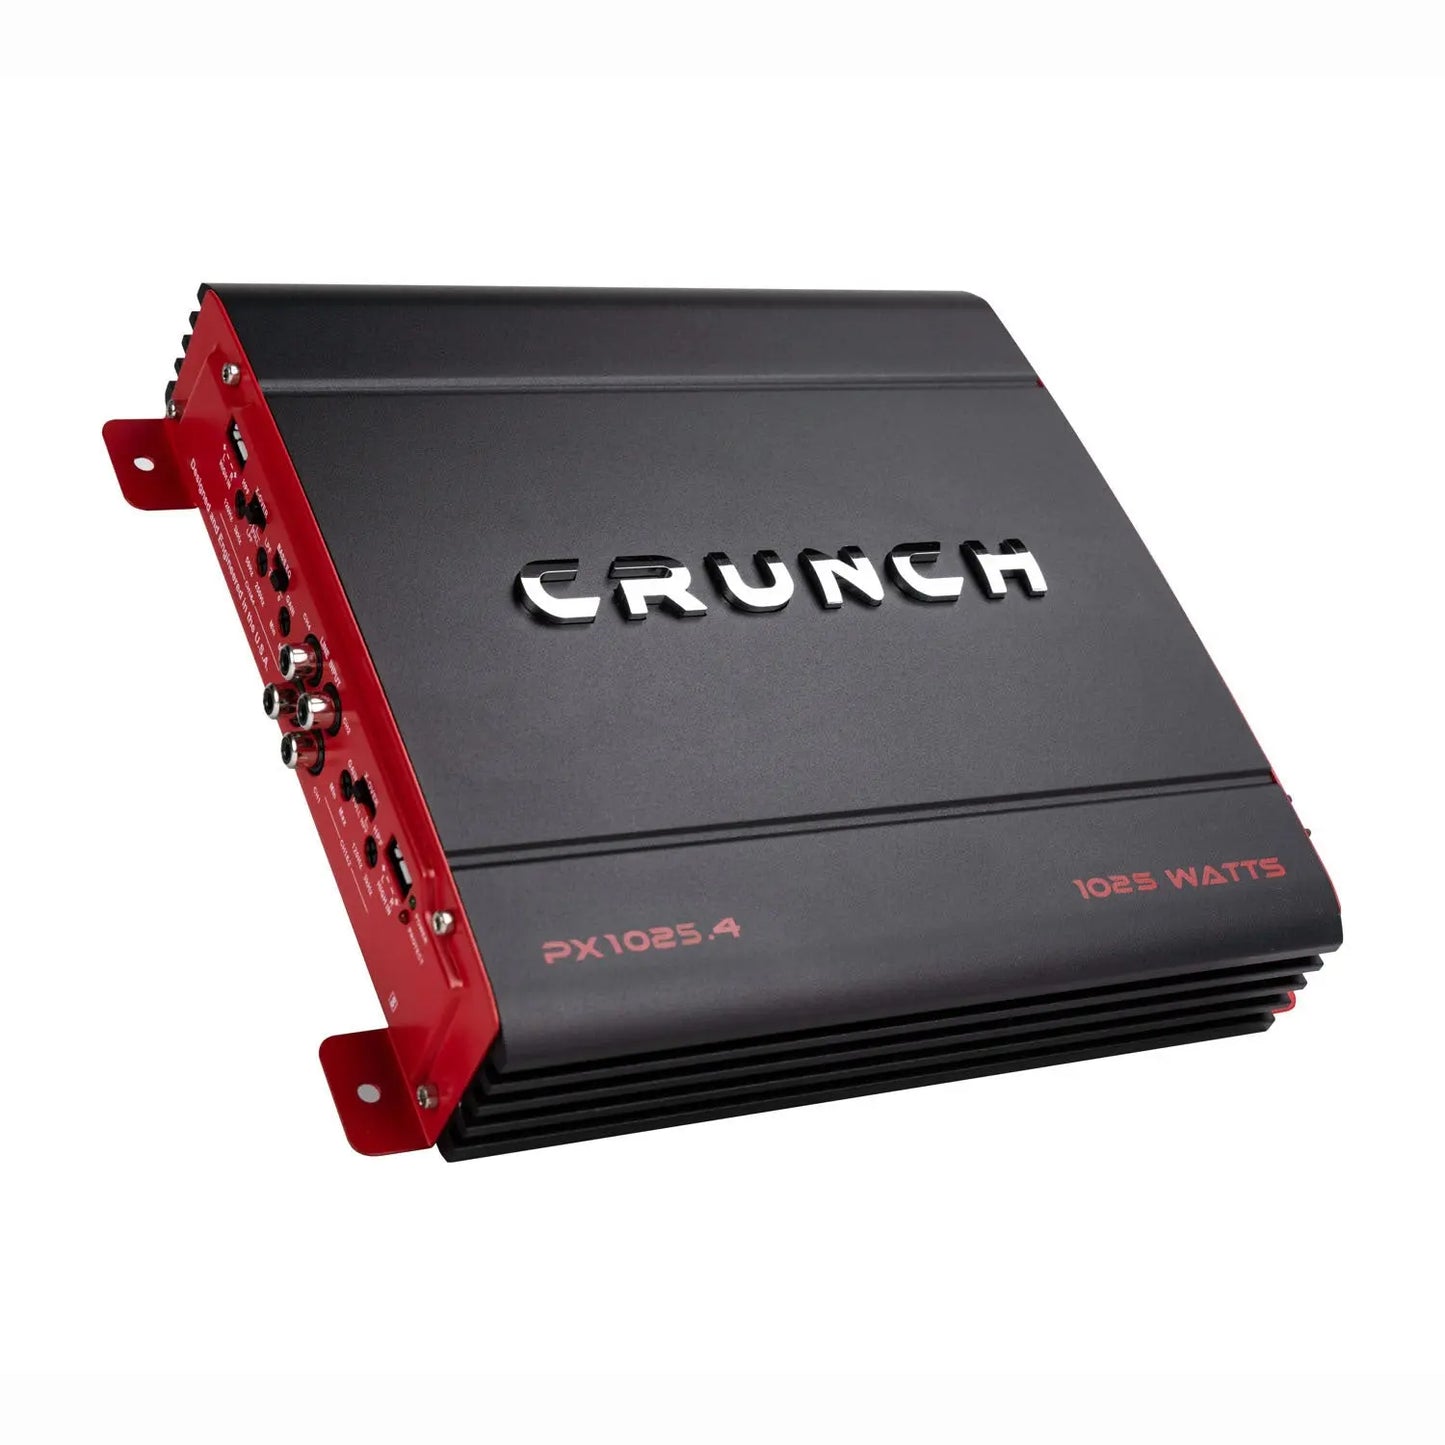 Crunch PX-1025.4 Power-X 4-Channel Amplifier 1000W Crunch Audio